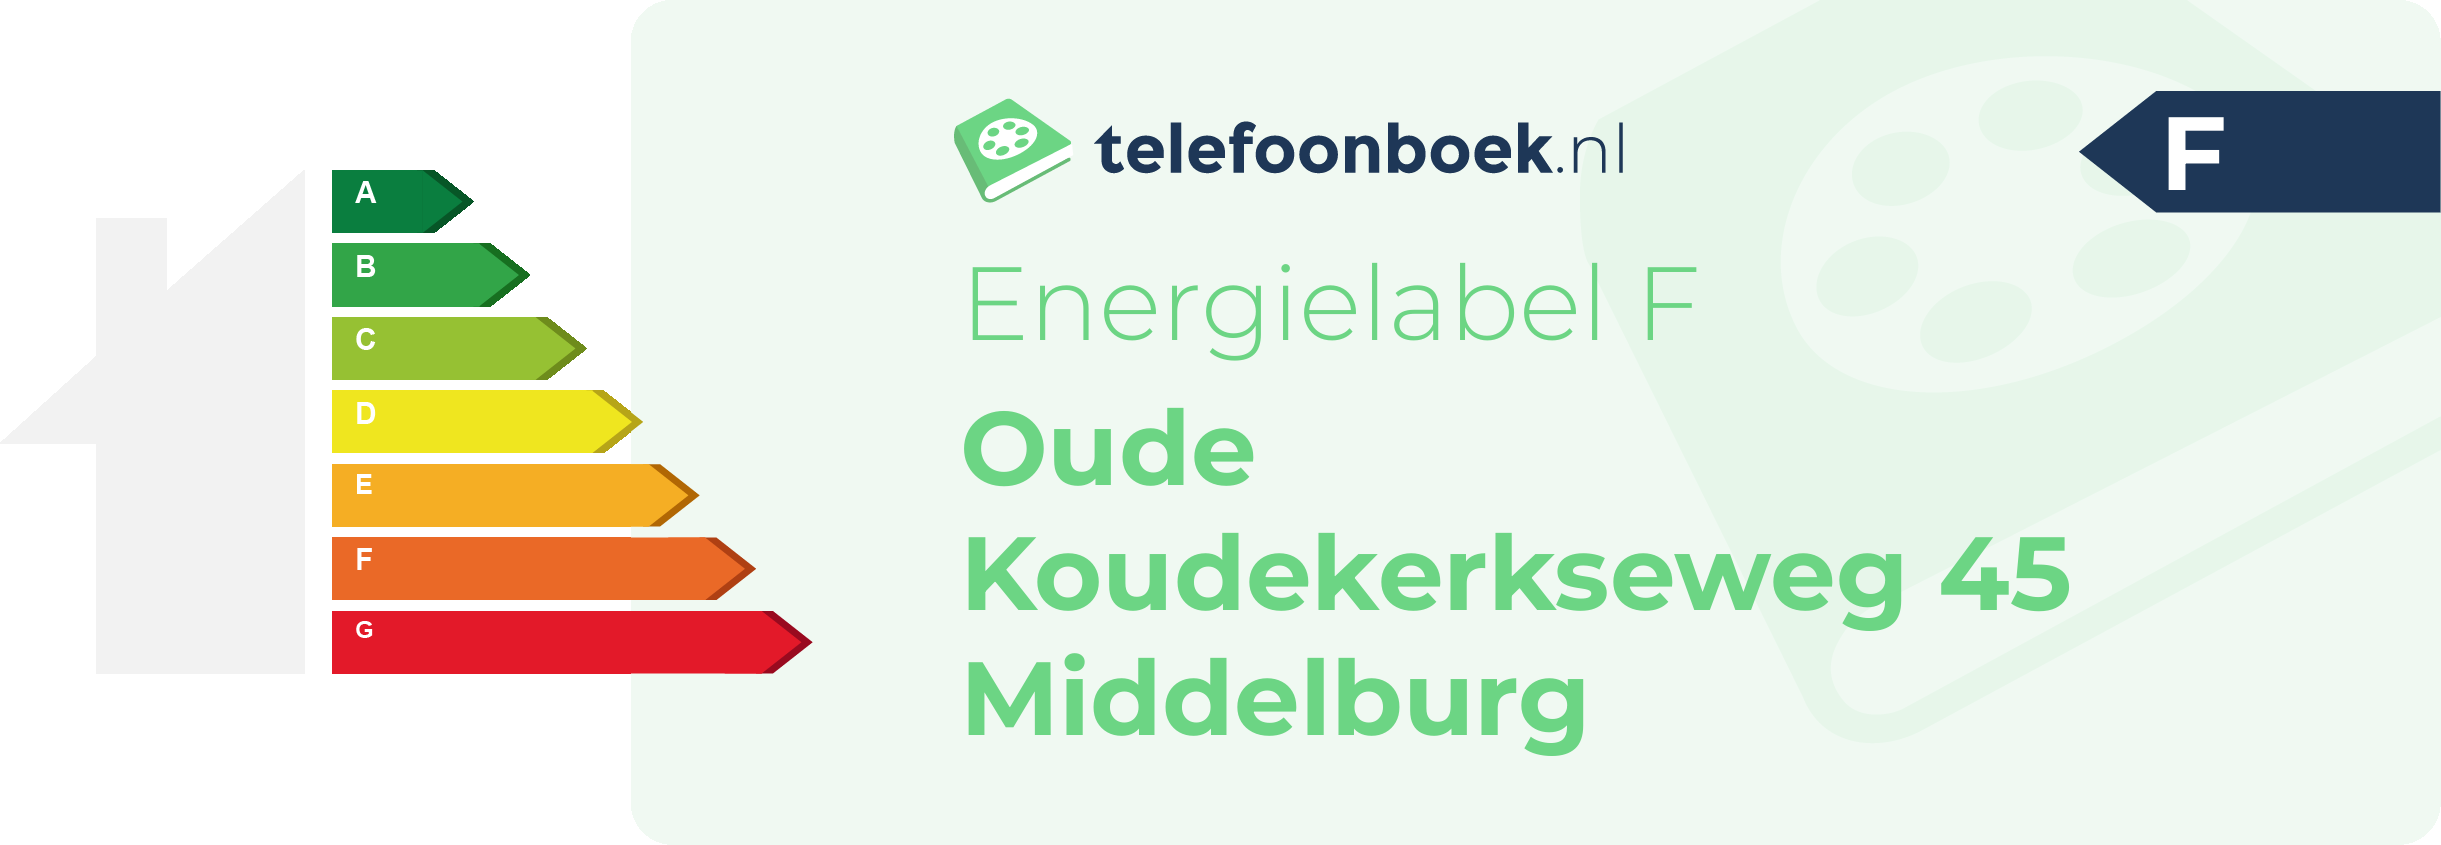 Energielabel Oude Koudekerkseweg 45 Middelburg